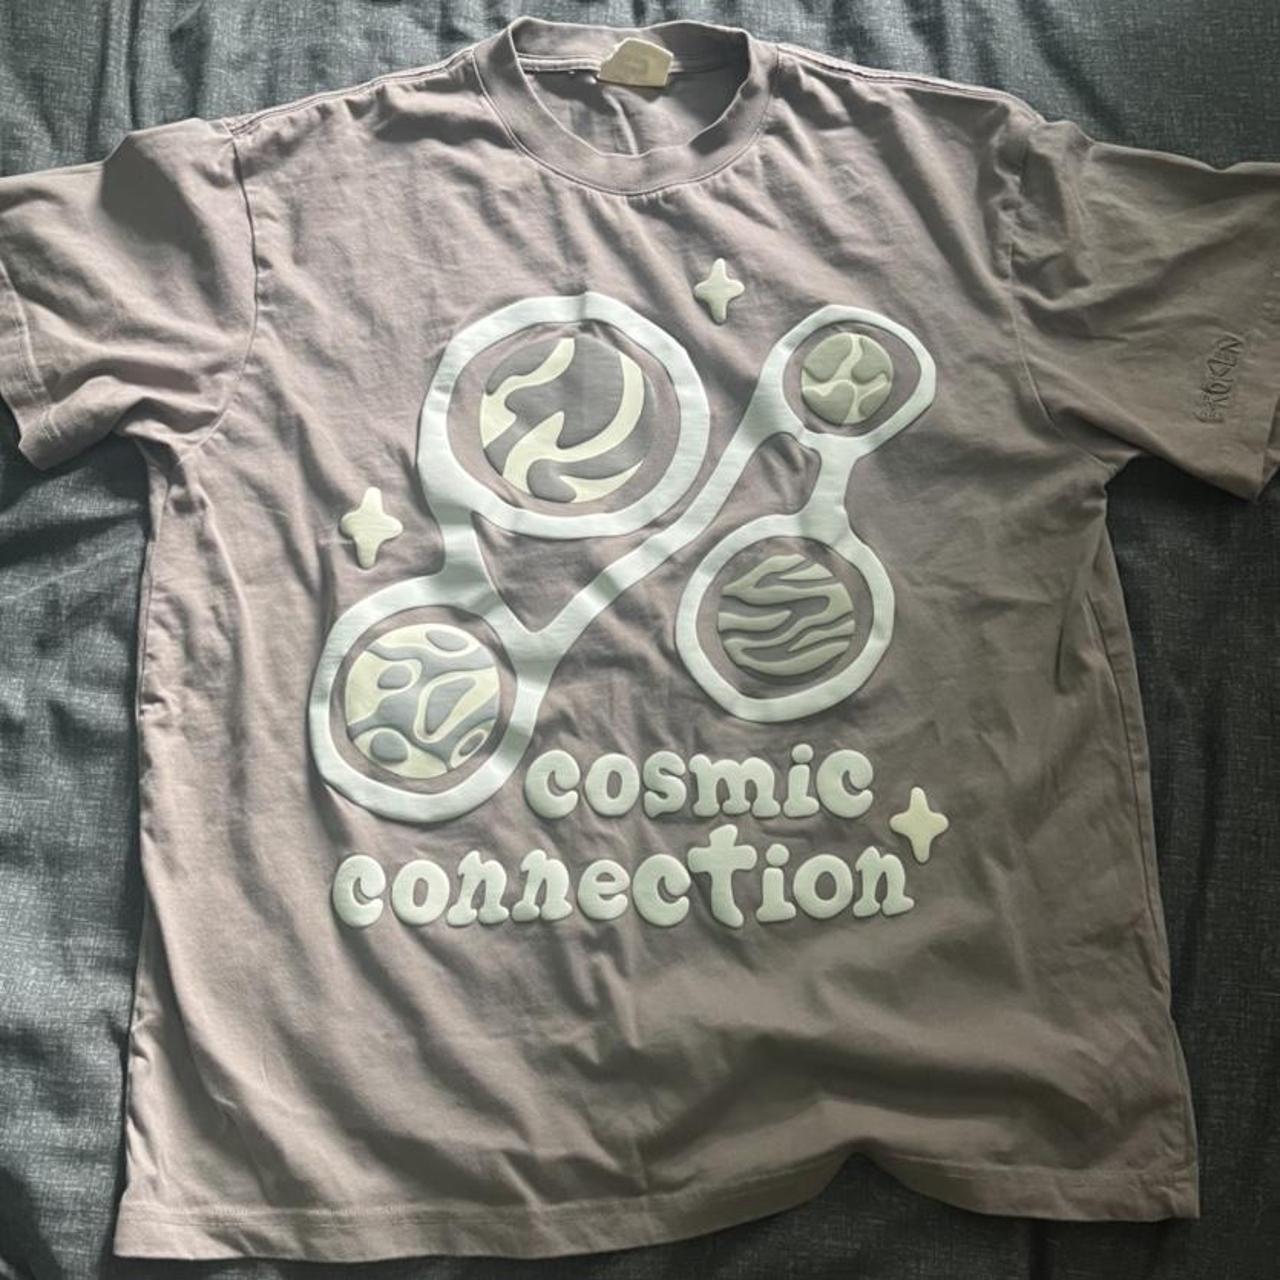 Broken planet cosmic connection shirt. Worn only a - Depop